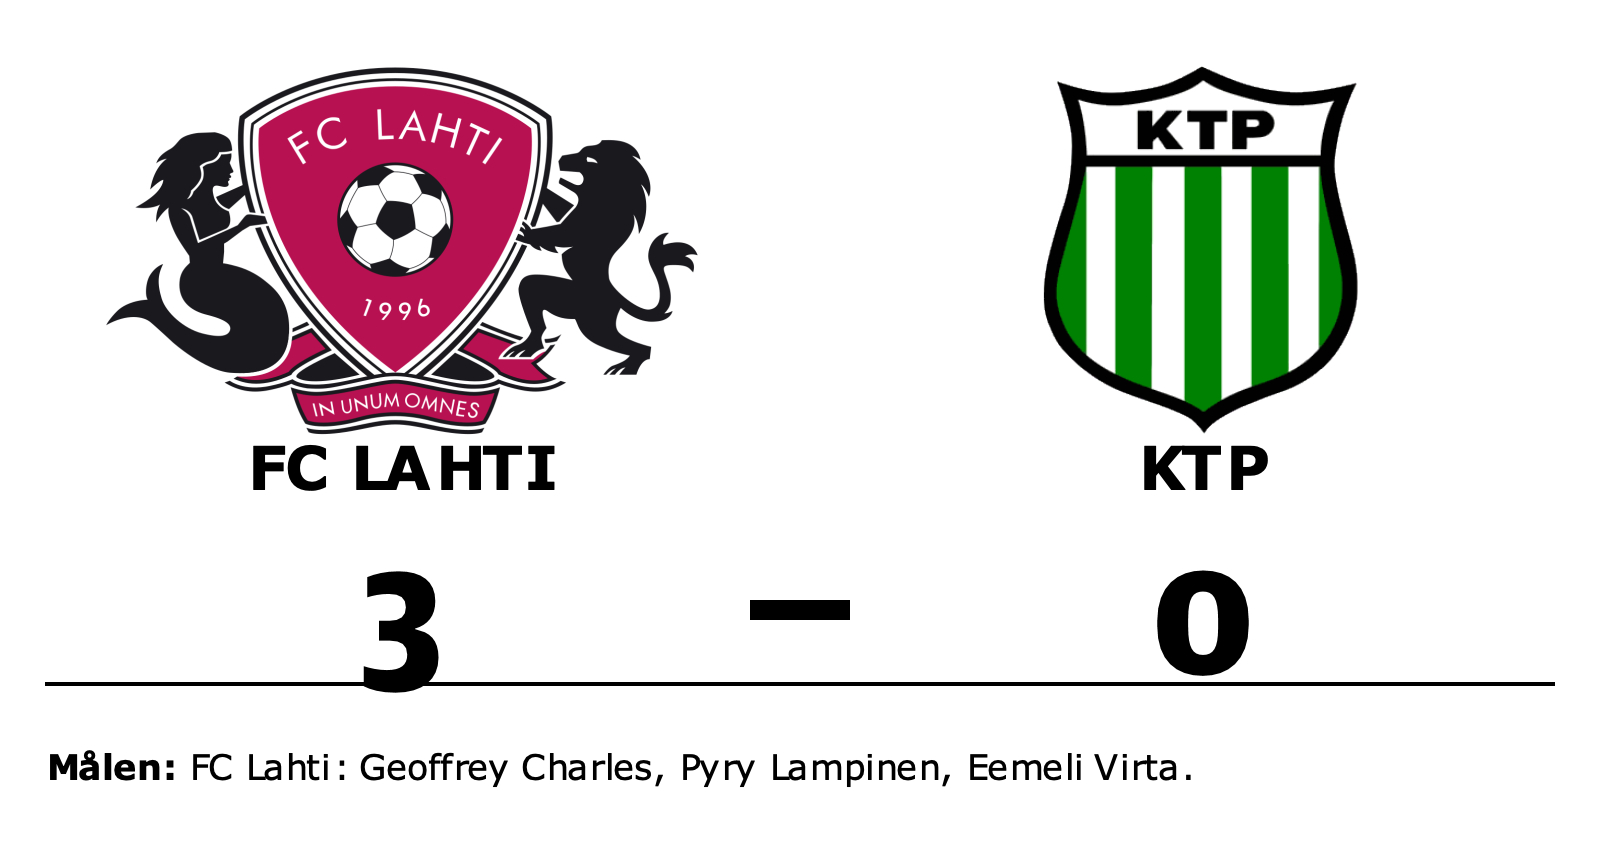 FC Lahti vann mot KTP